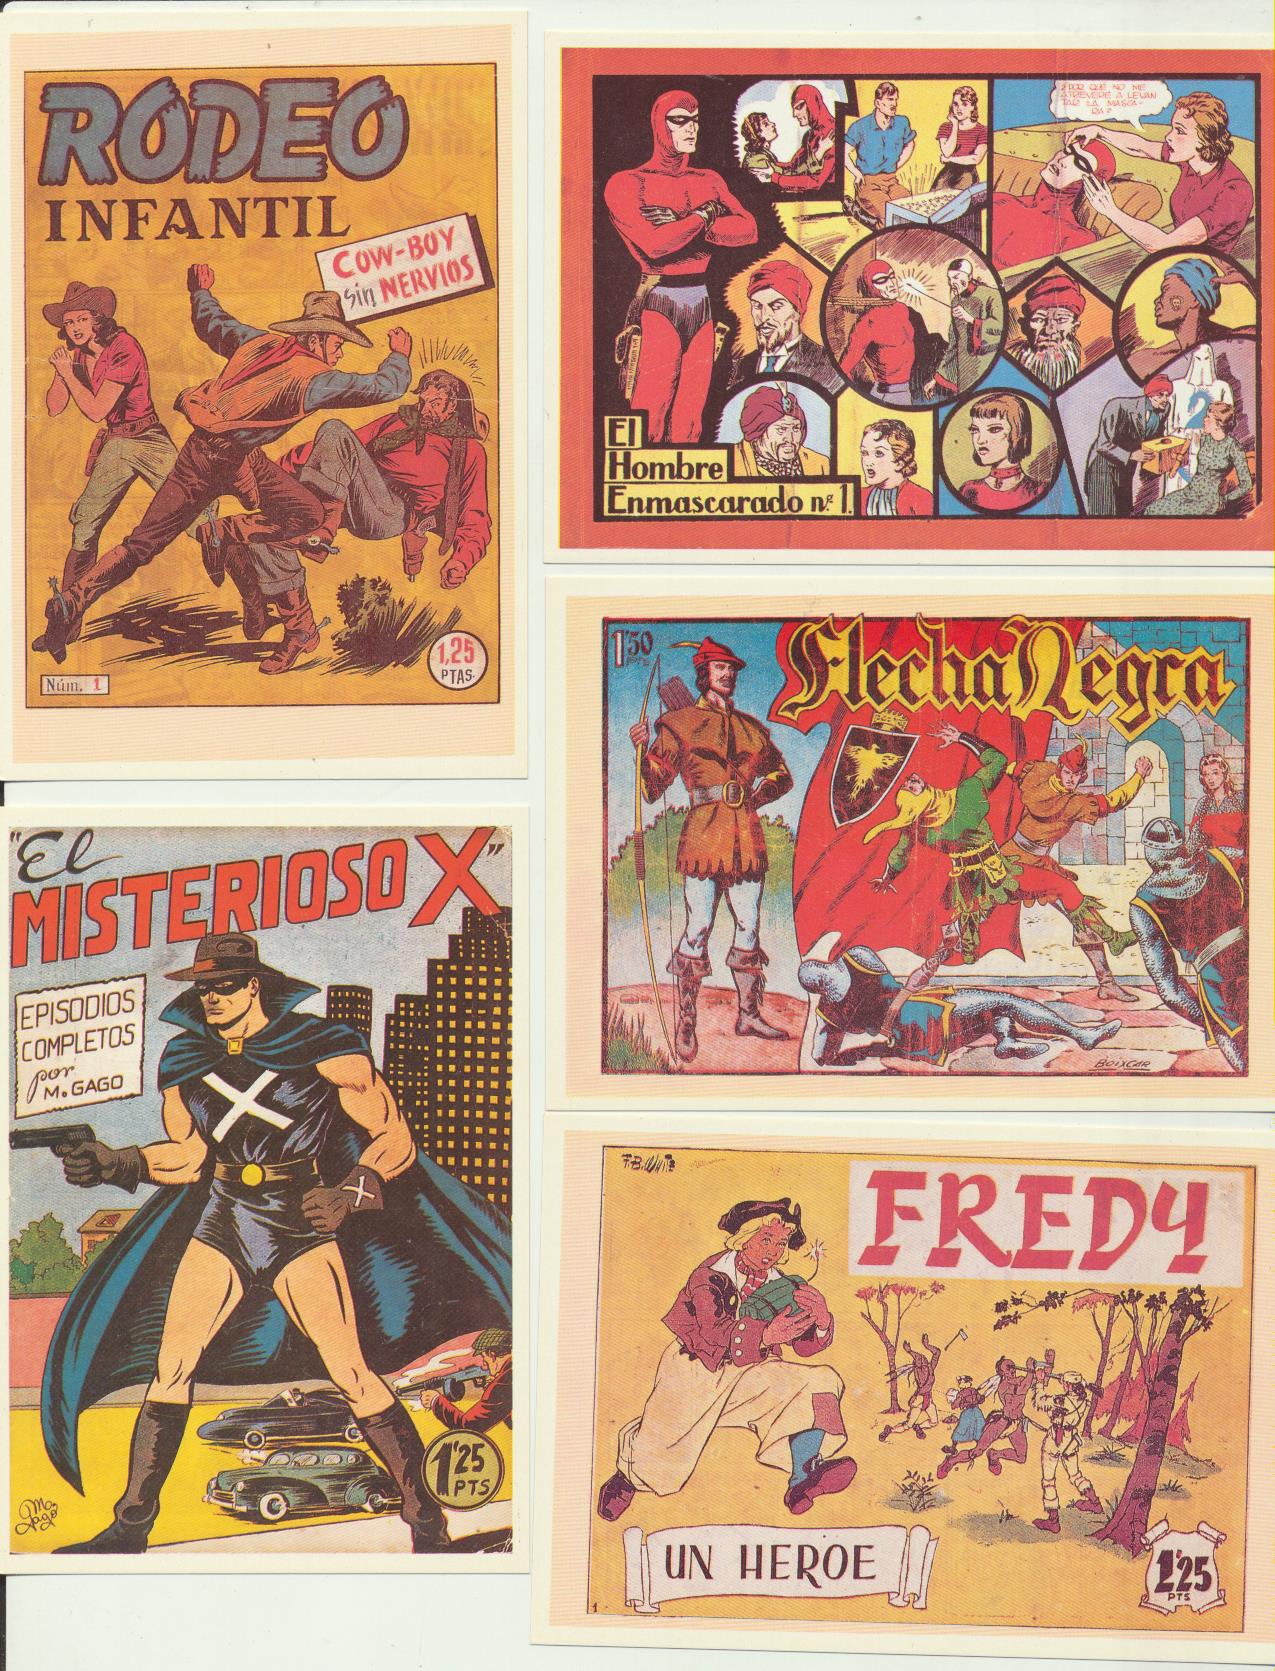 Lote de 5 fichas nº 1. Rodeo Infantil, Misterioso X, Flecha Negra, Fredy y El Hombre Enmascarado